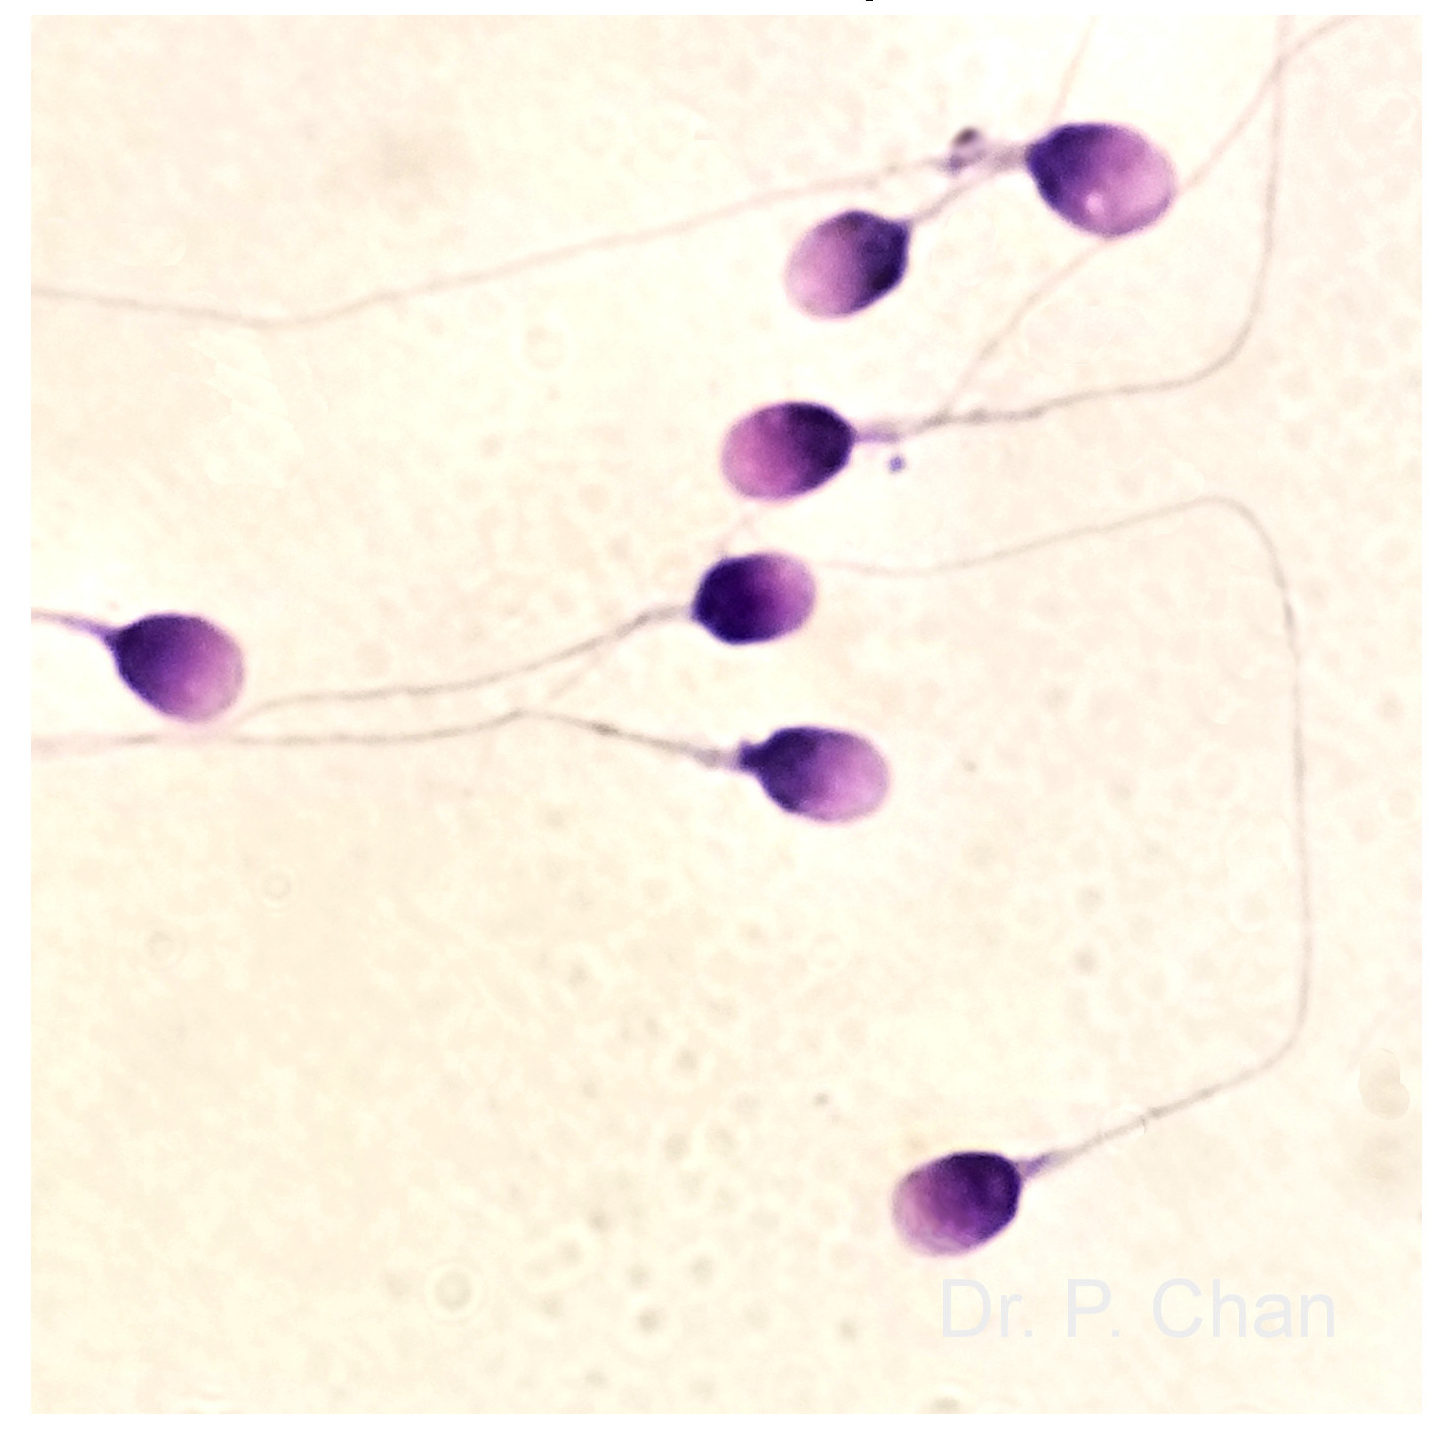 сперма из влагалища у малолеток фото 73